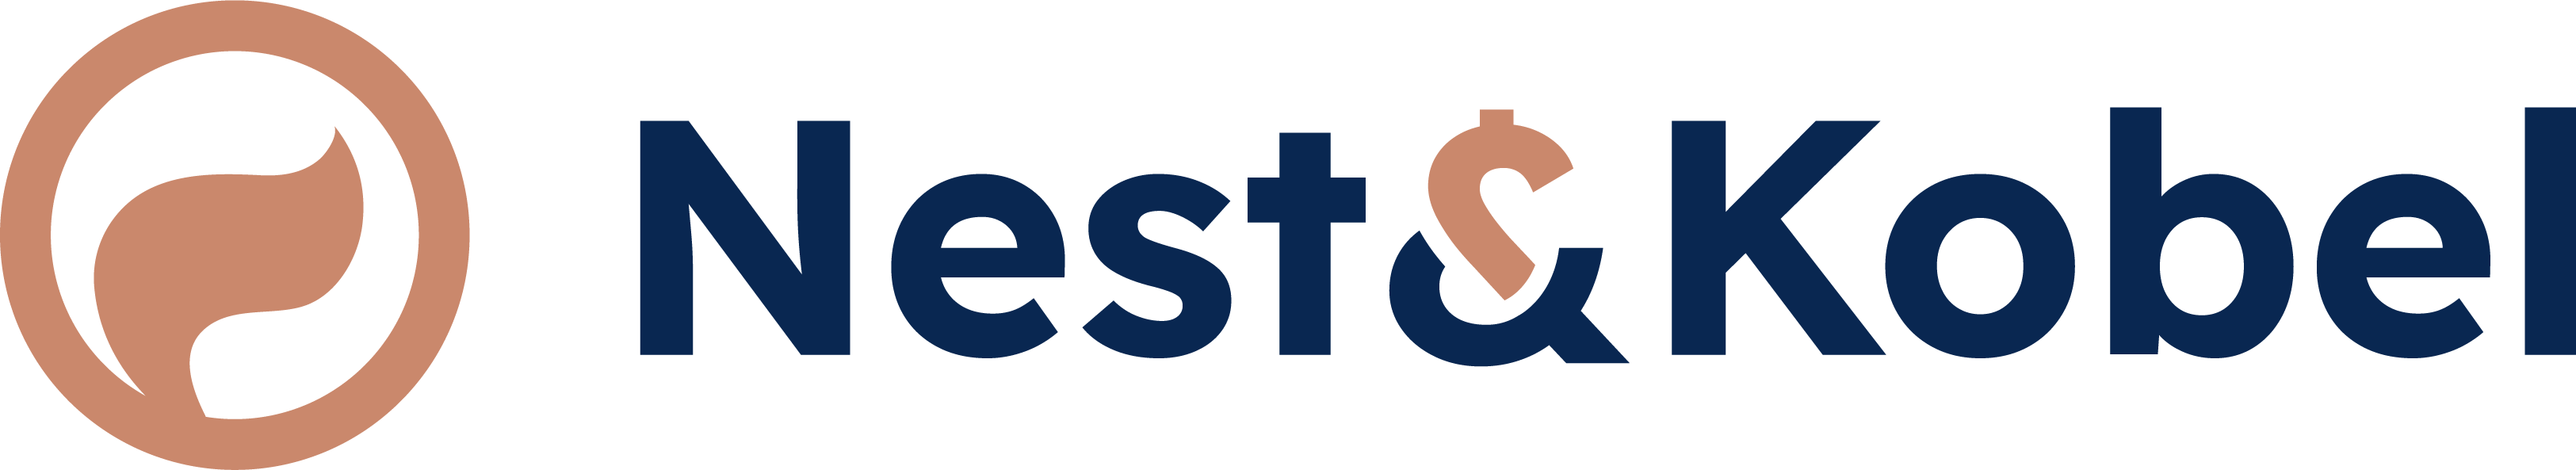 Nest_Kobel_logo